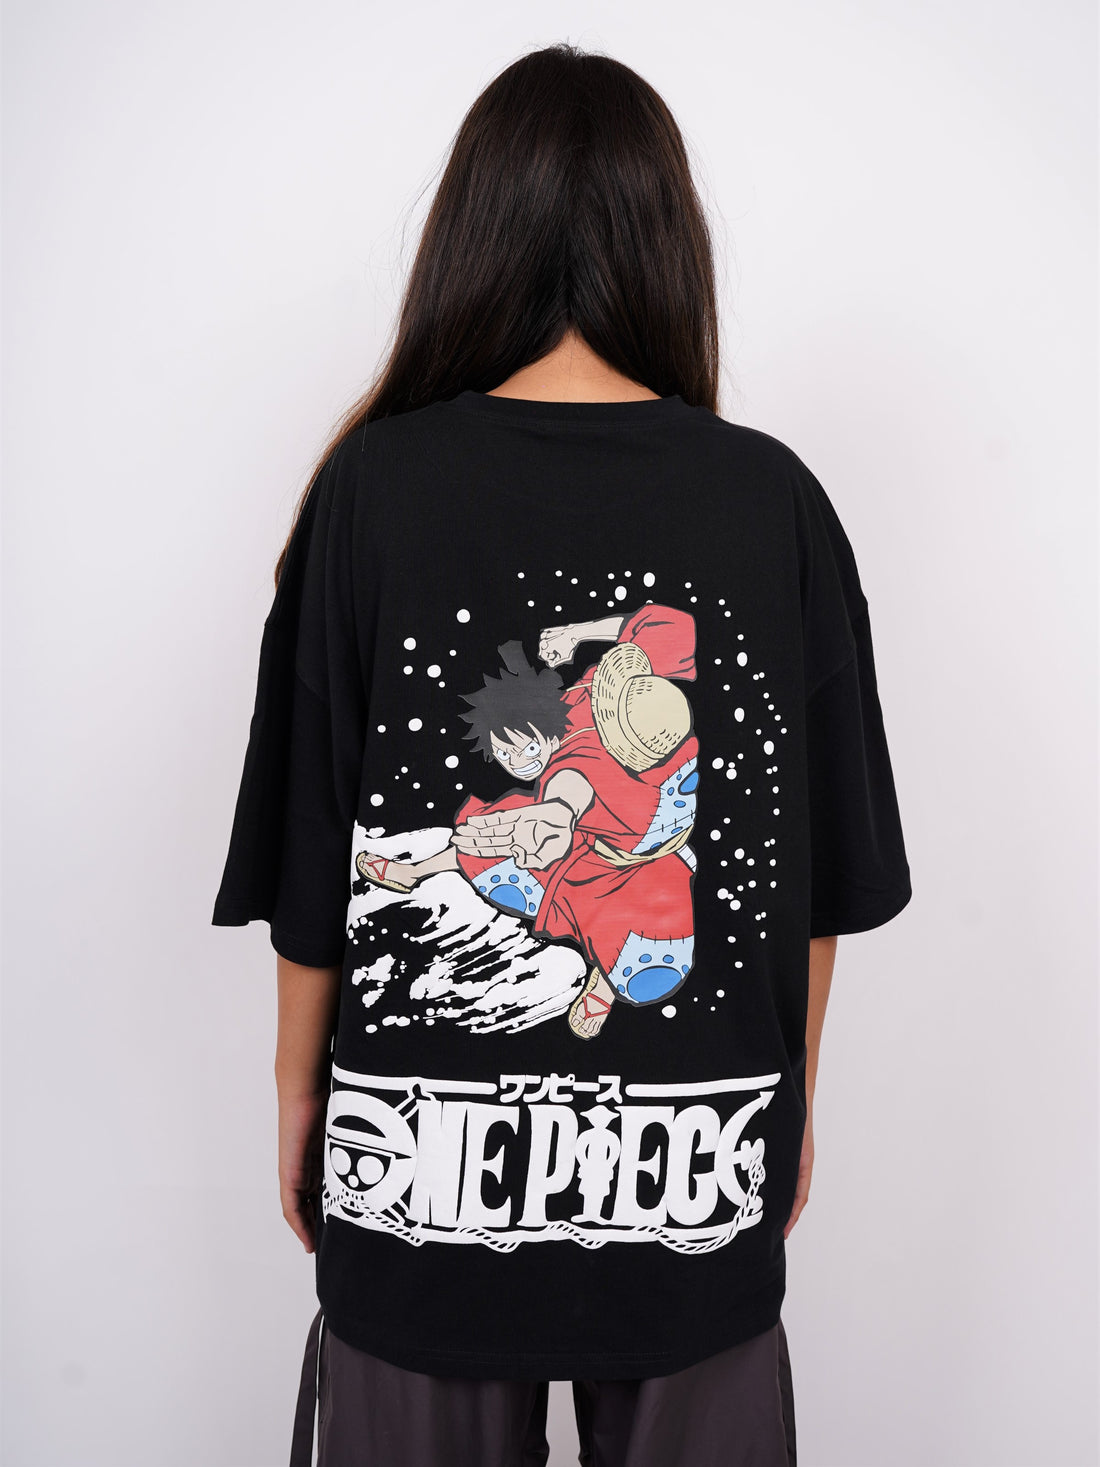 Monkey d. Luffy - One Piece Drop Sleeved Unisex Tee (T-shirt)